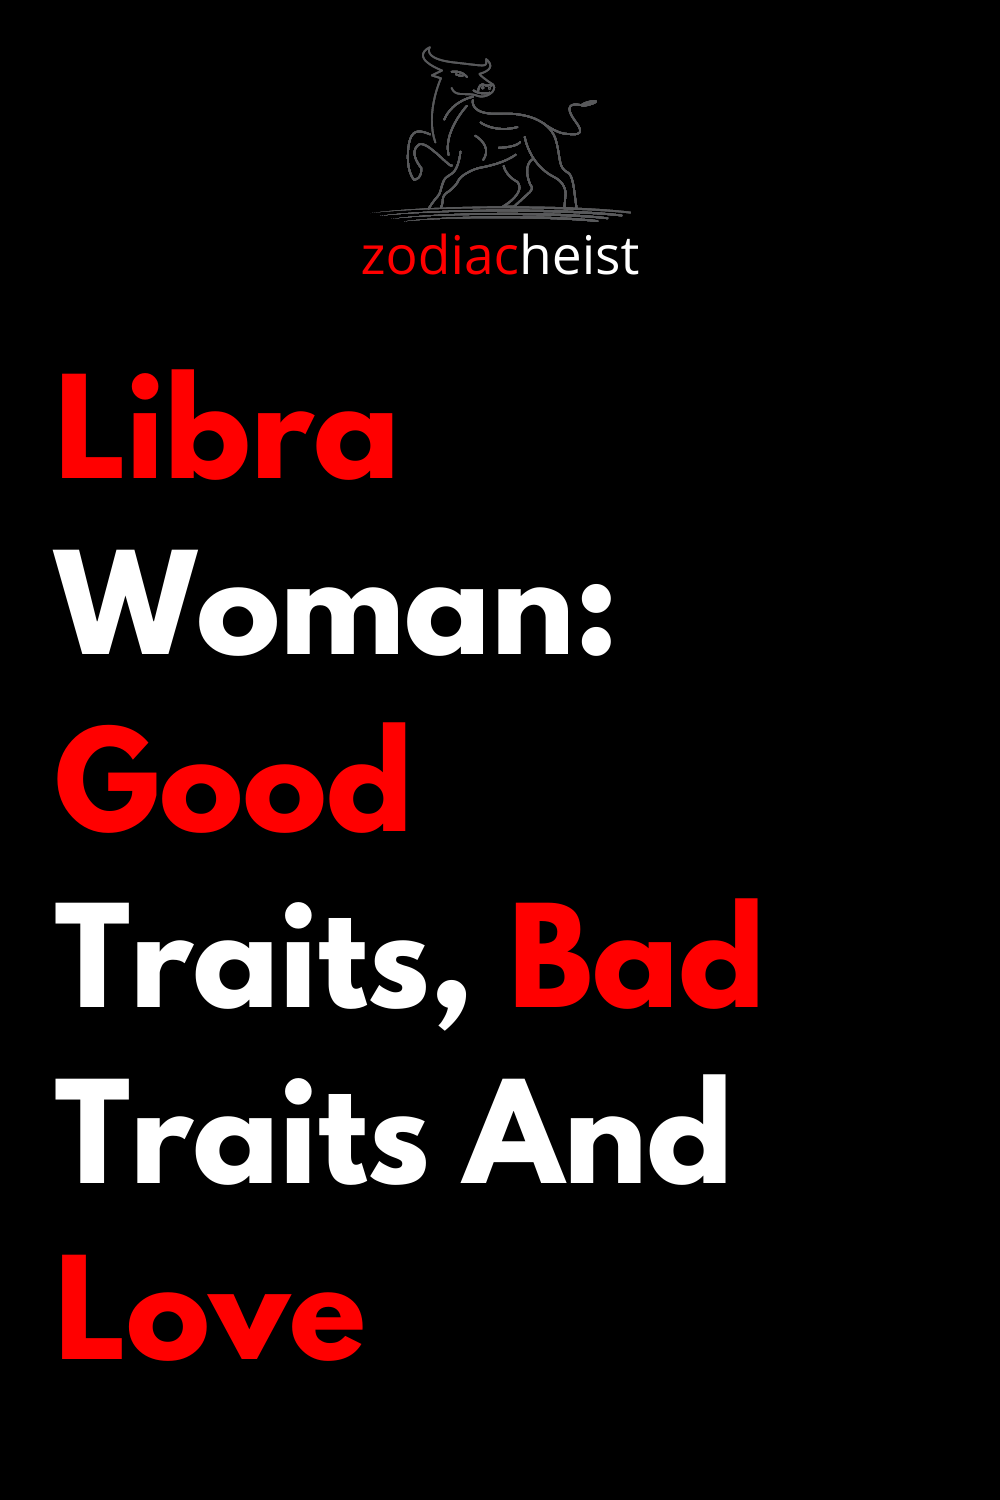 Libra Woman: Good Traits, Bad Traits And Love